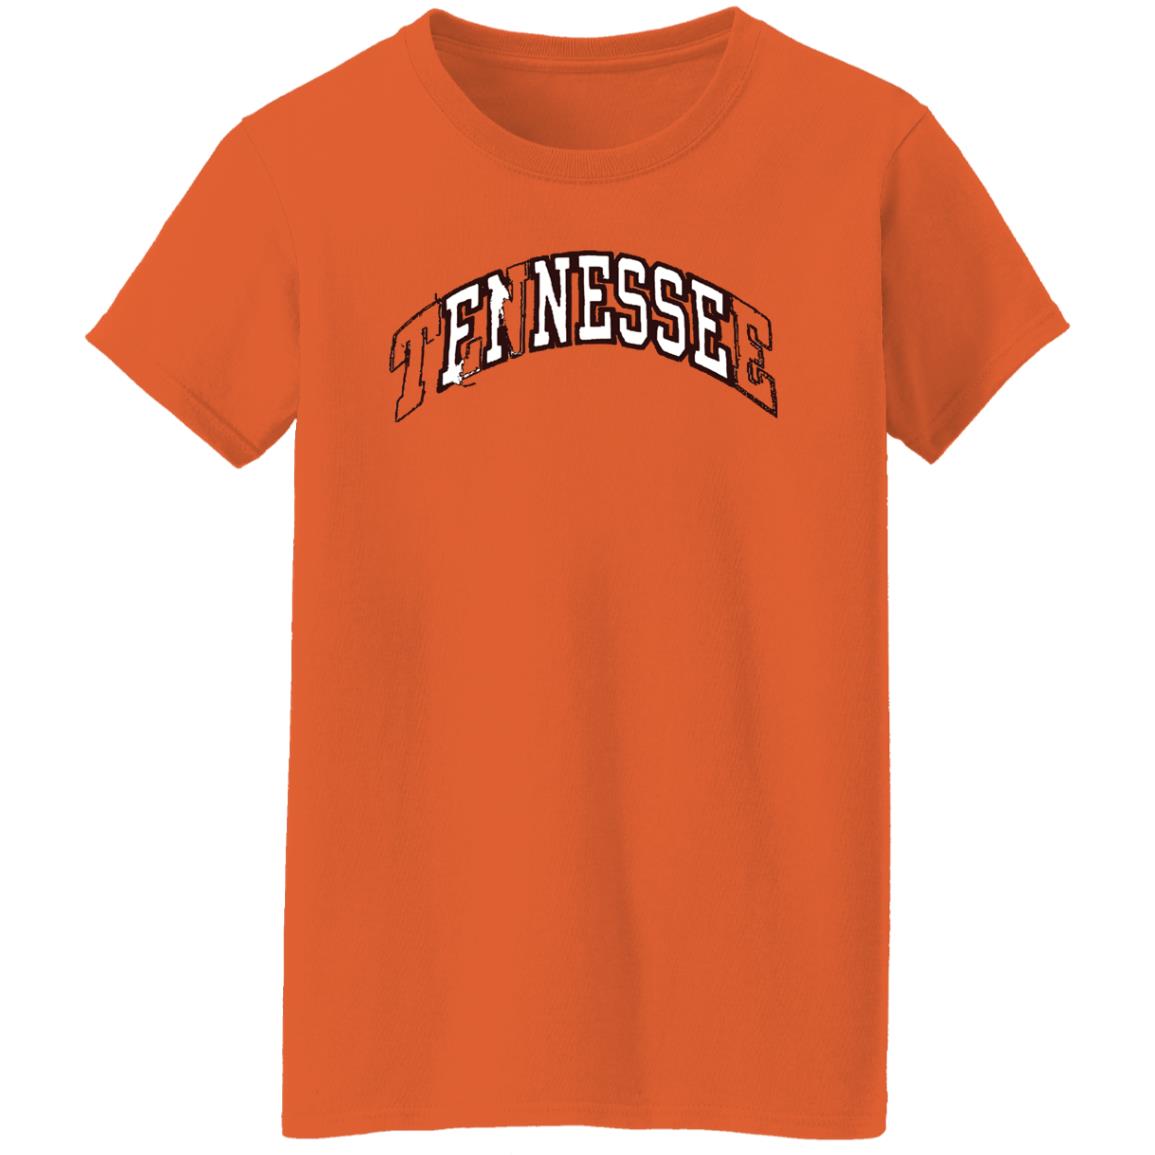 Finesse tennessee sweatshirt - Endastore.com